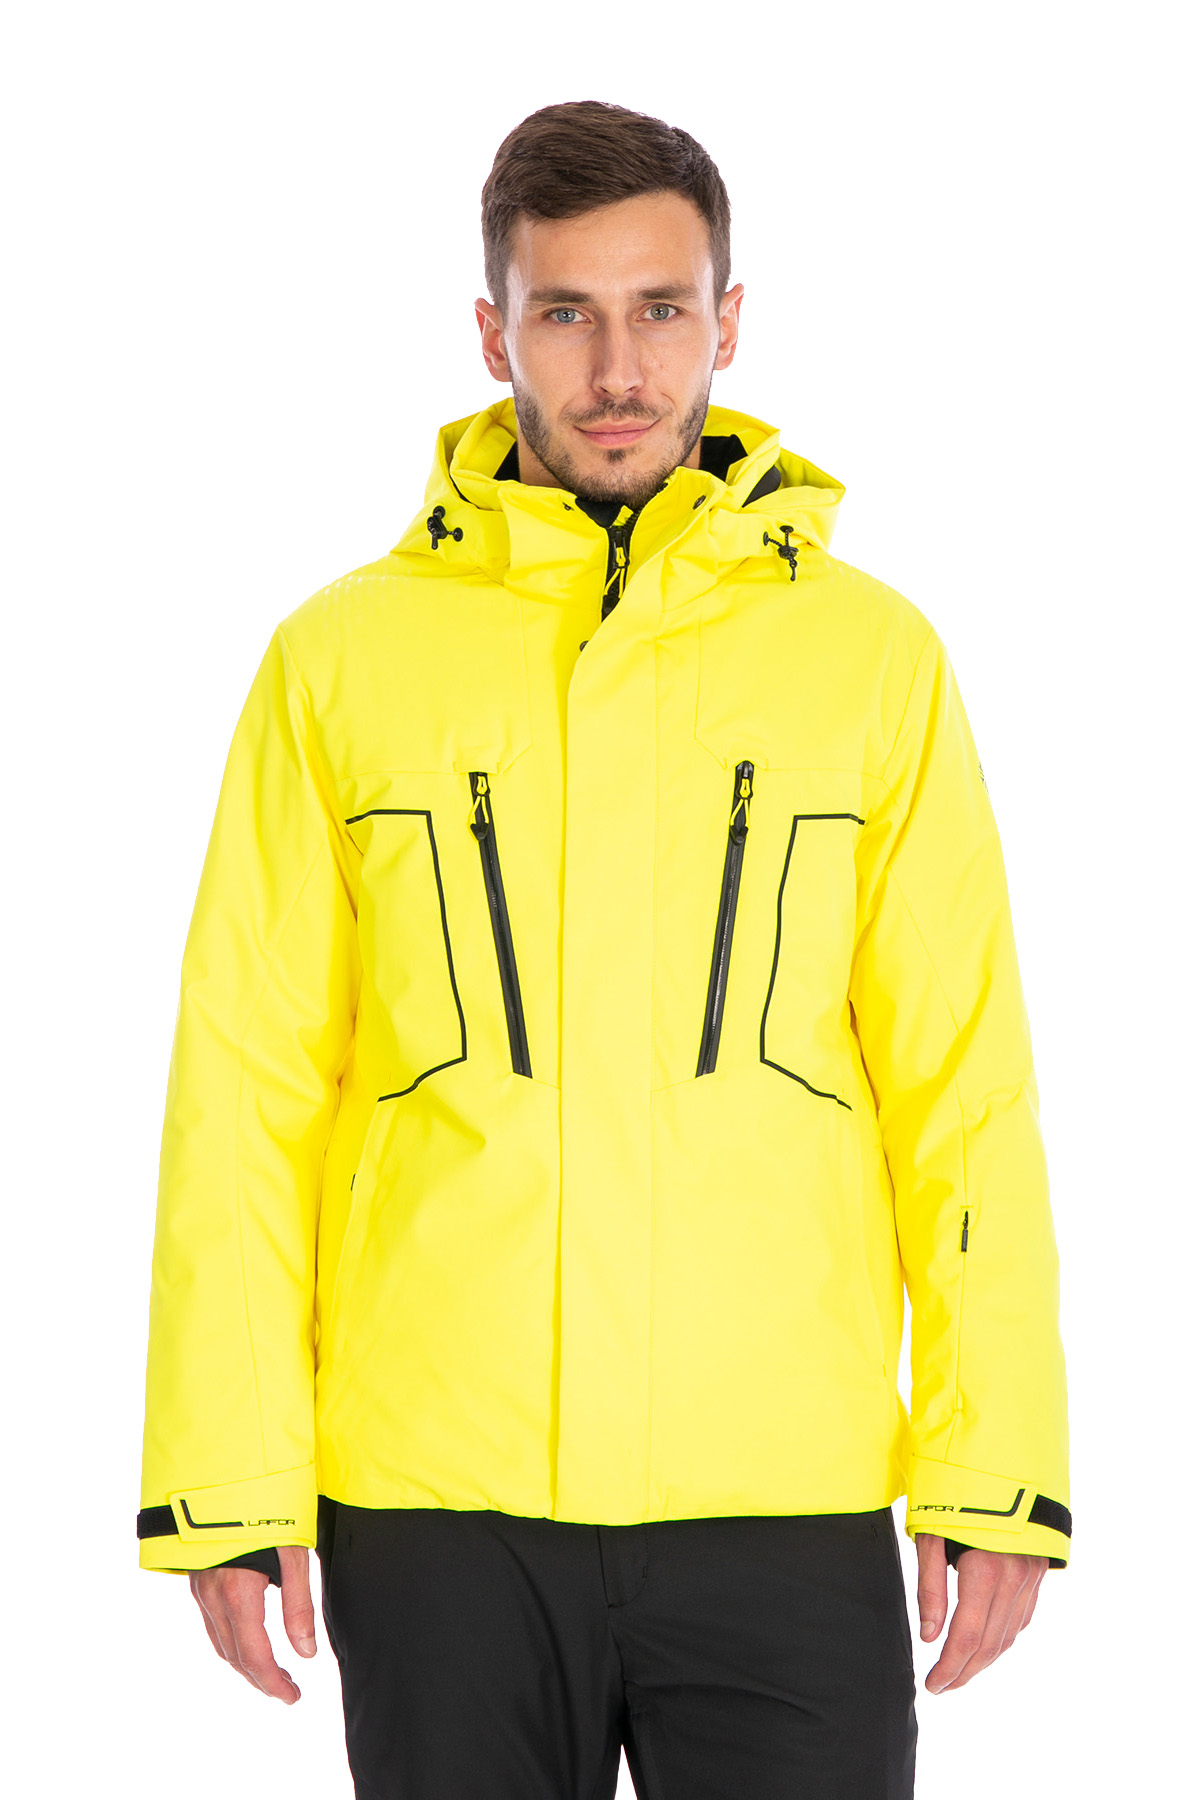 Мужская горнолыжная Куртка Lafor Желтый, 767013 (56, 3xl)